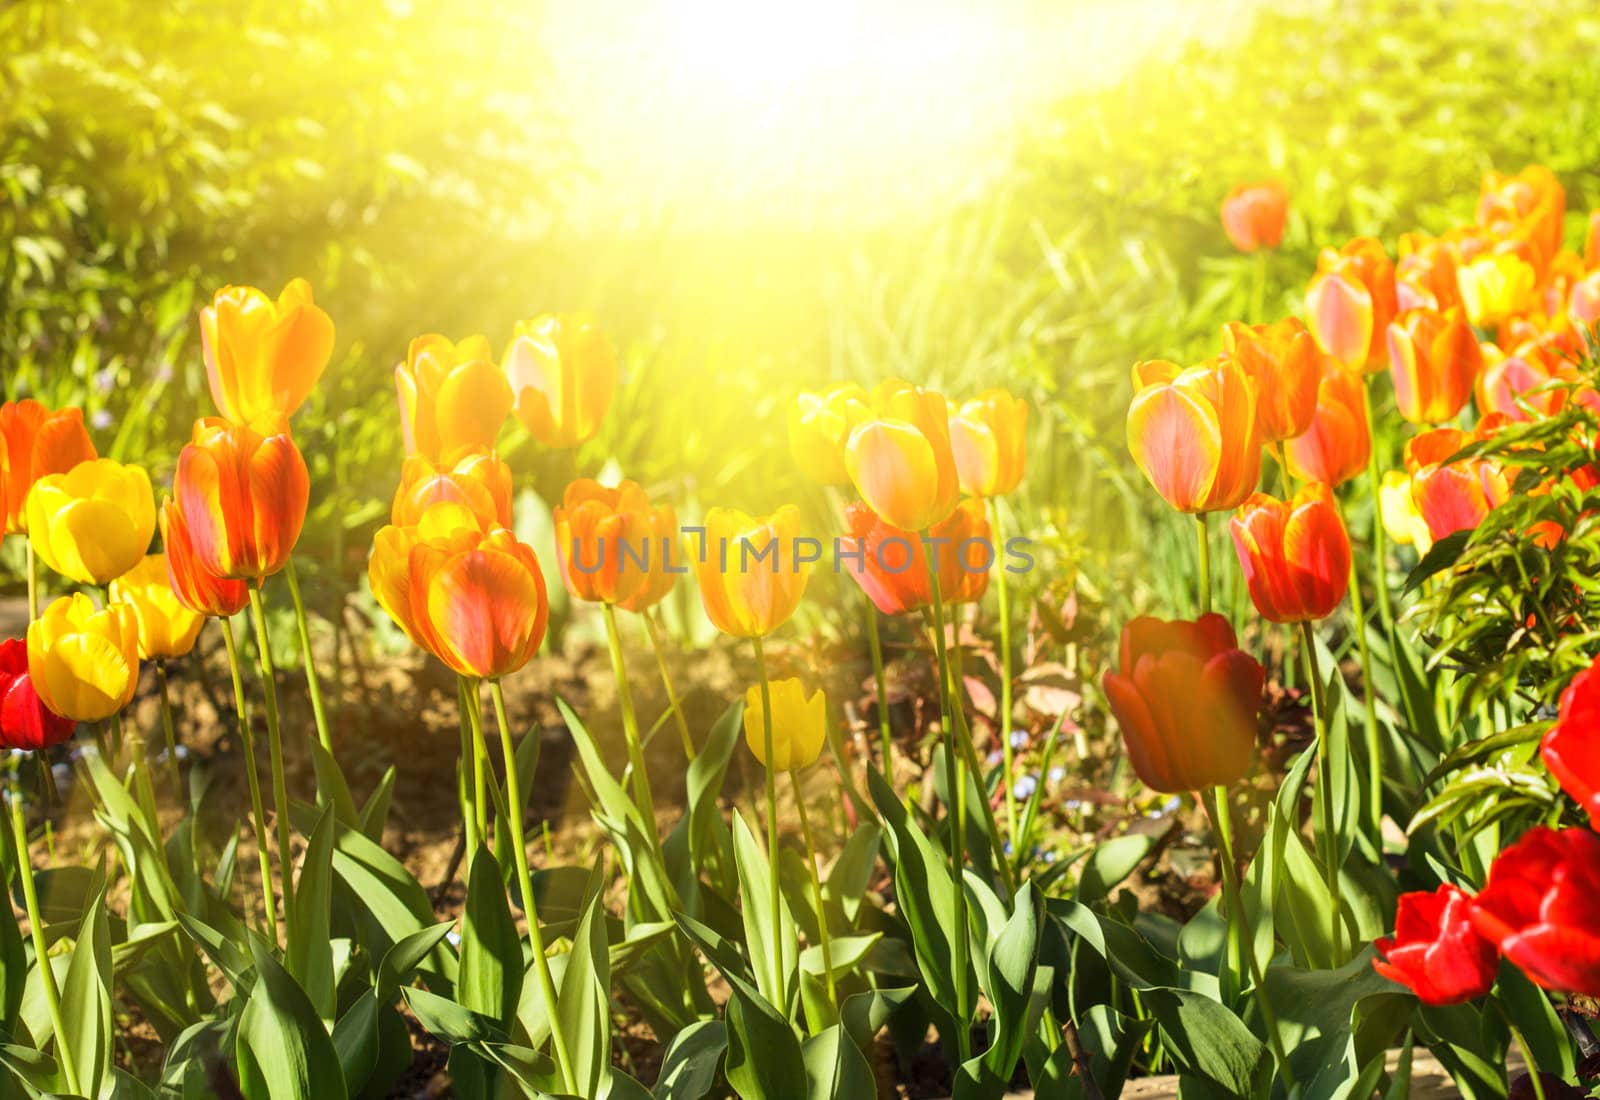 Colourfull tulips by oksix